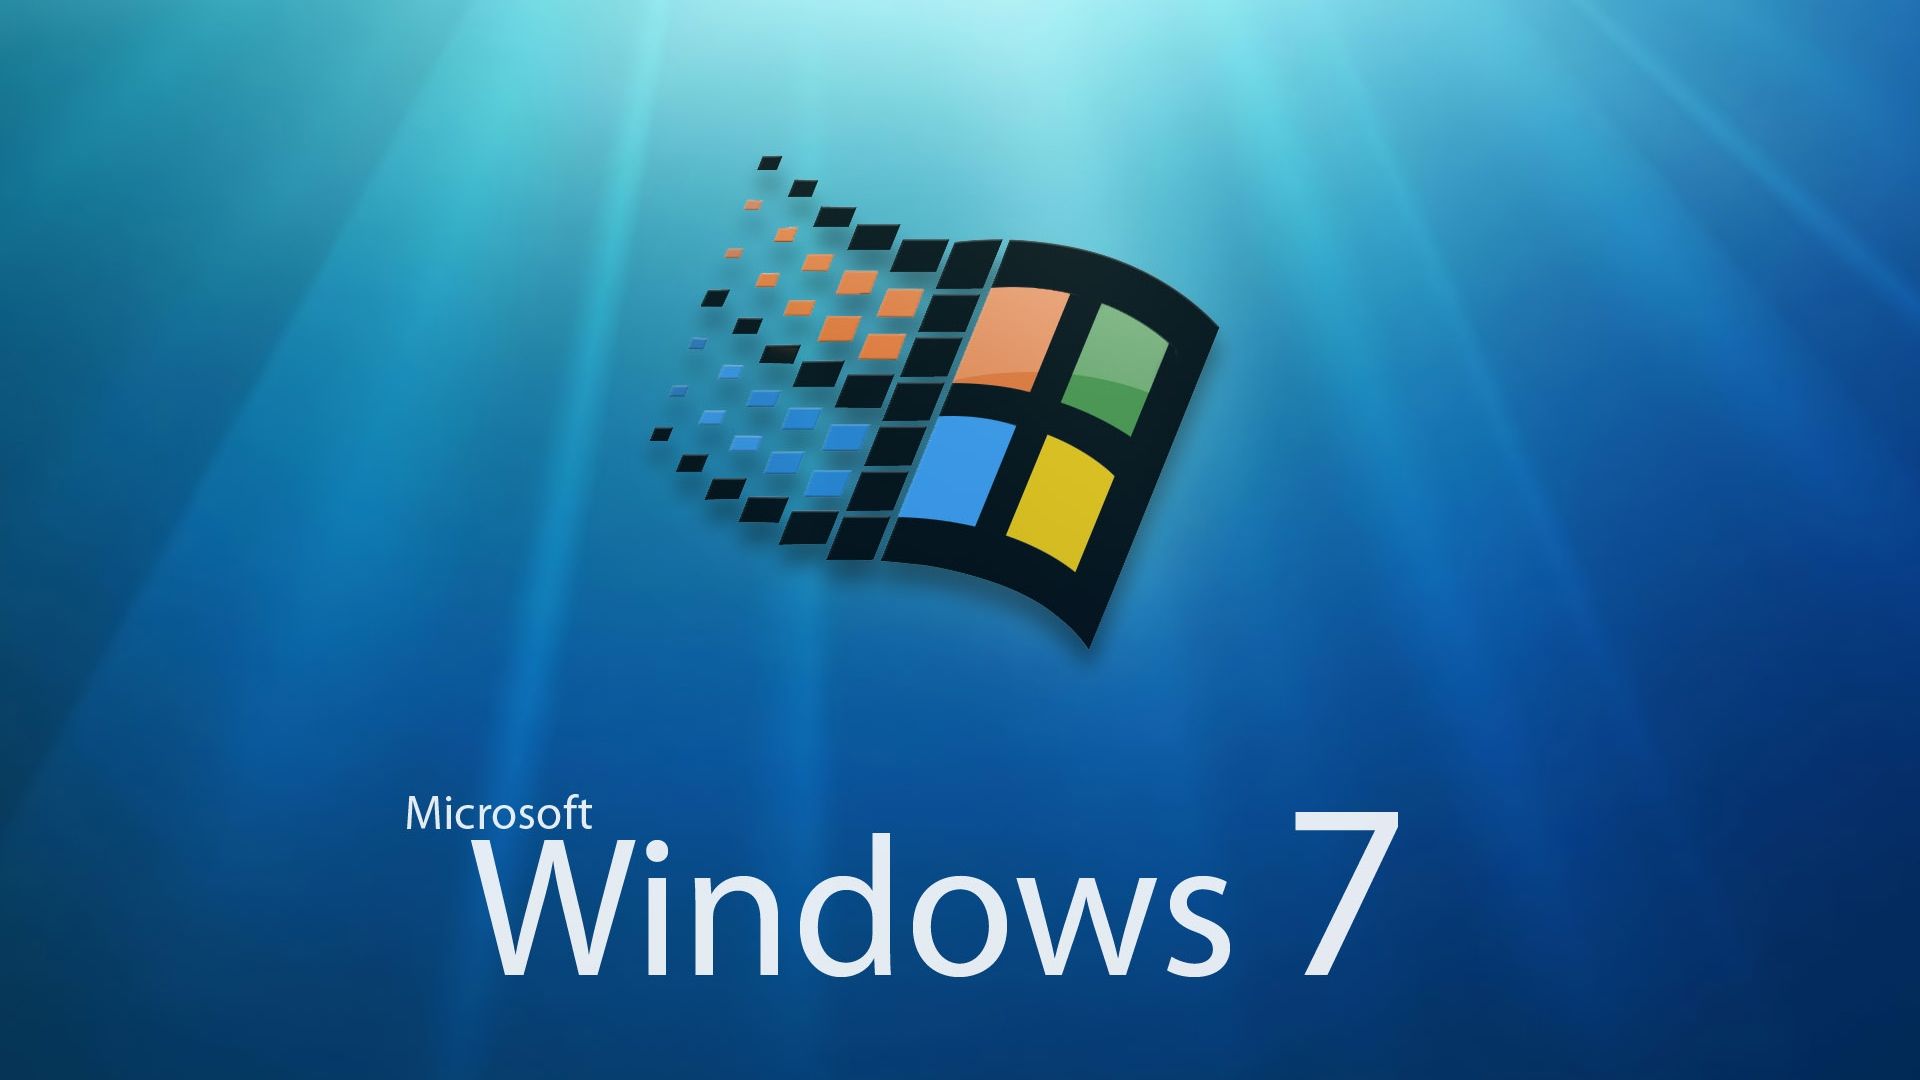 Free download Microsoft Windows 7 logo desktop wallpaper picture